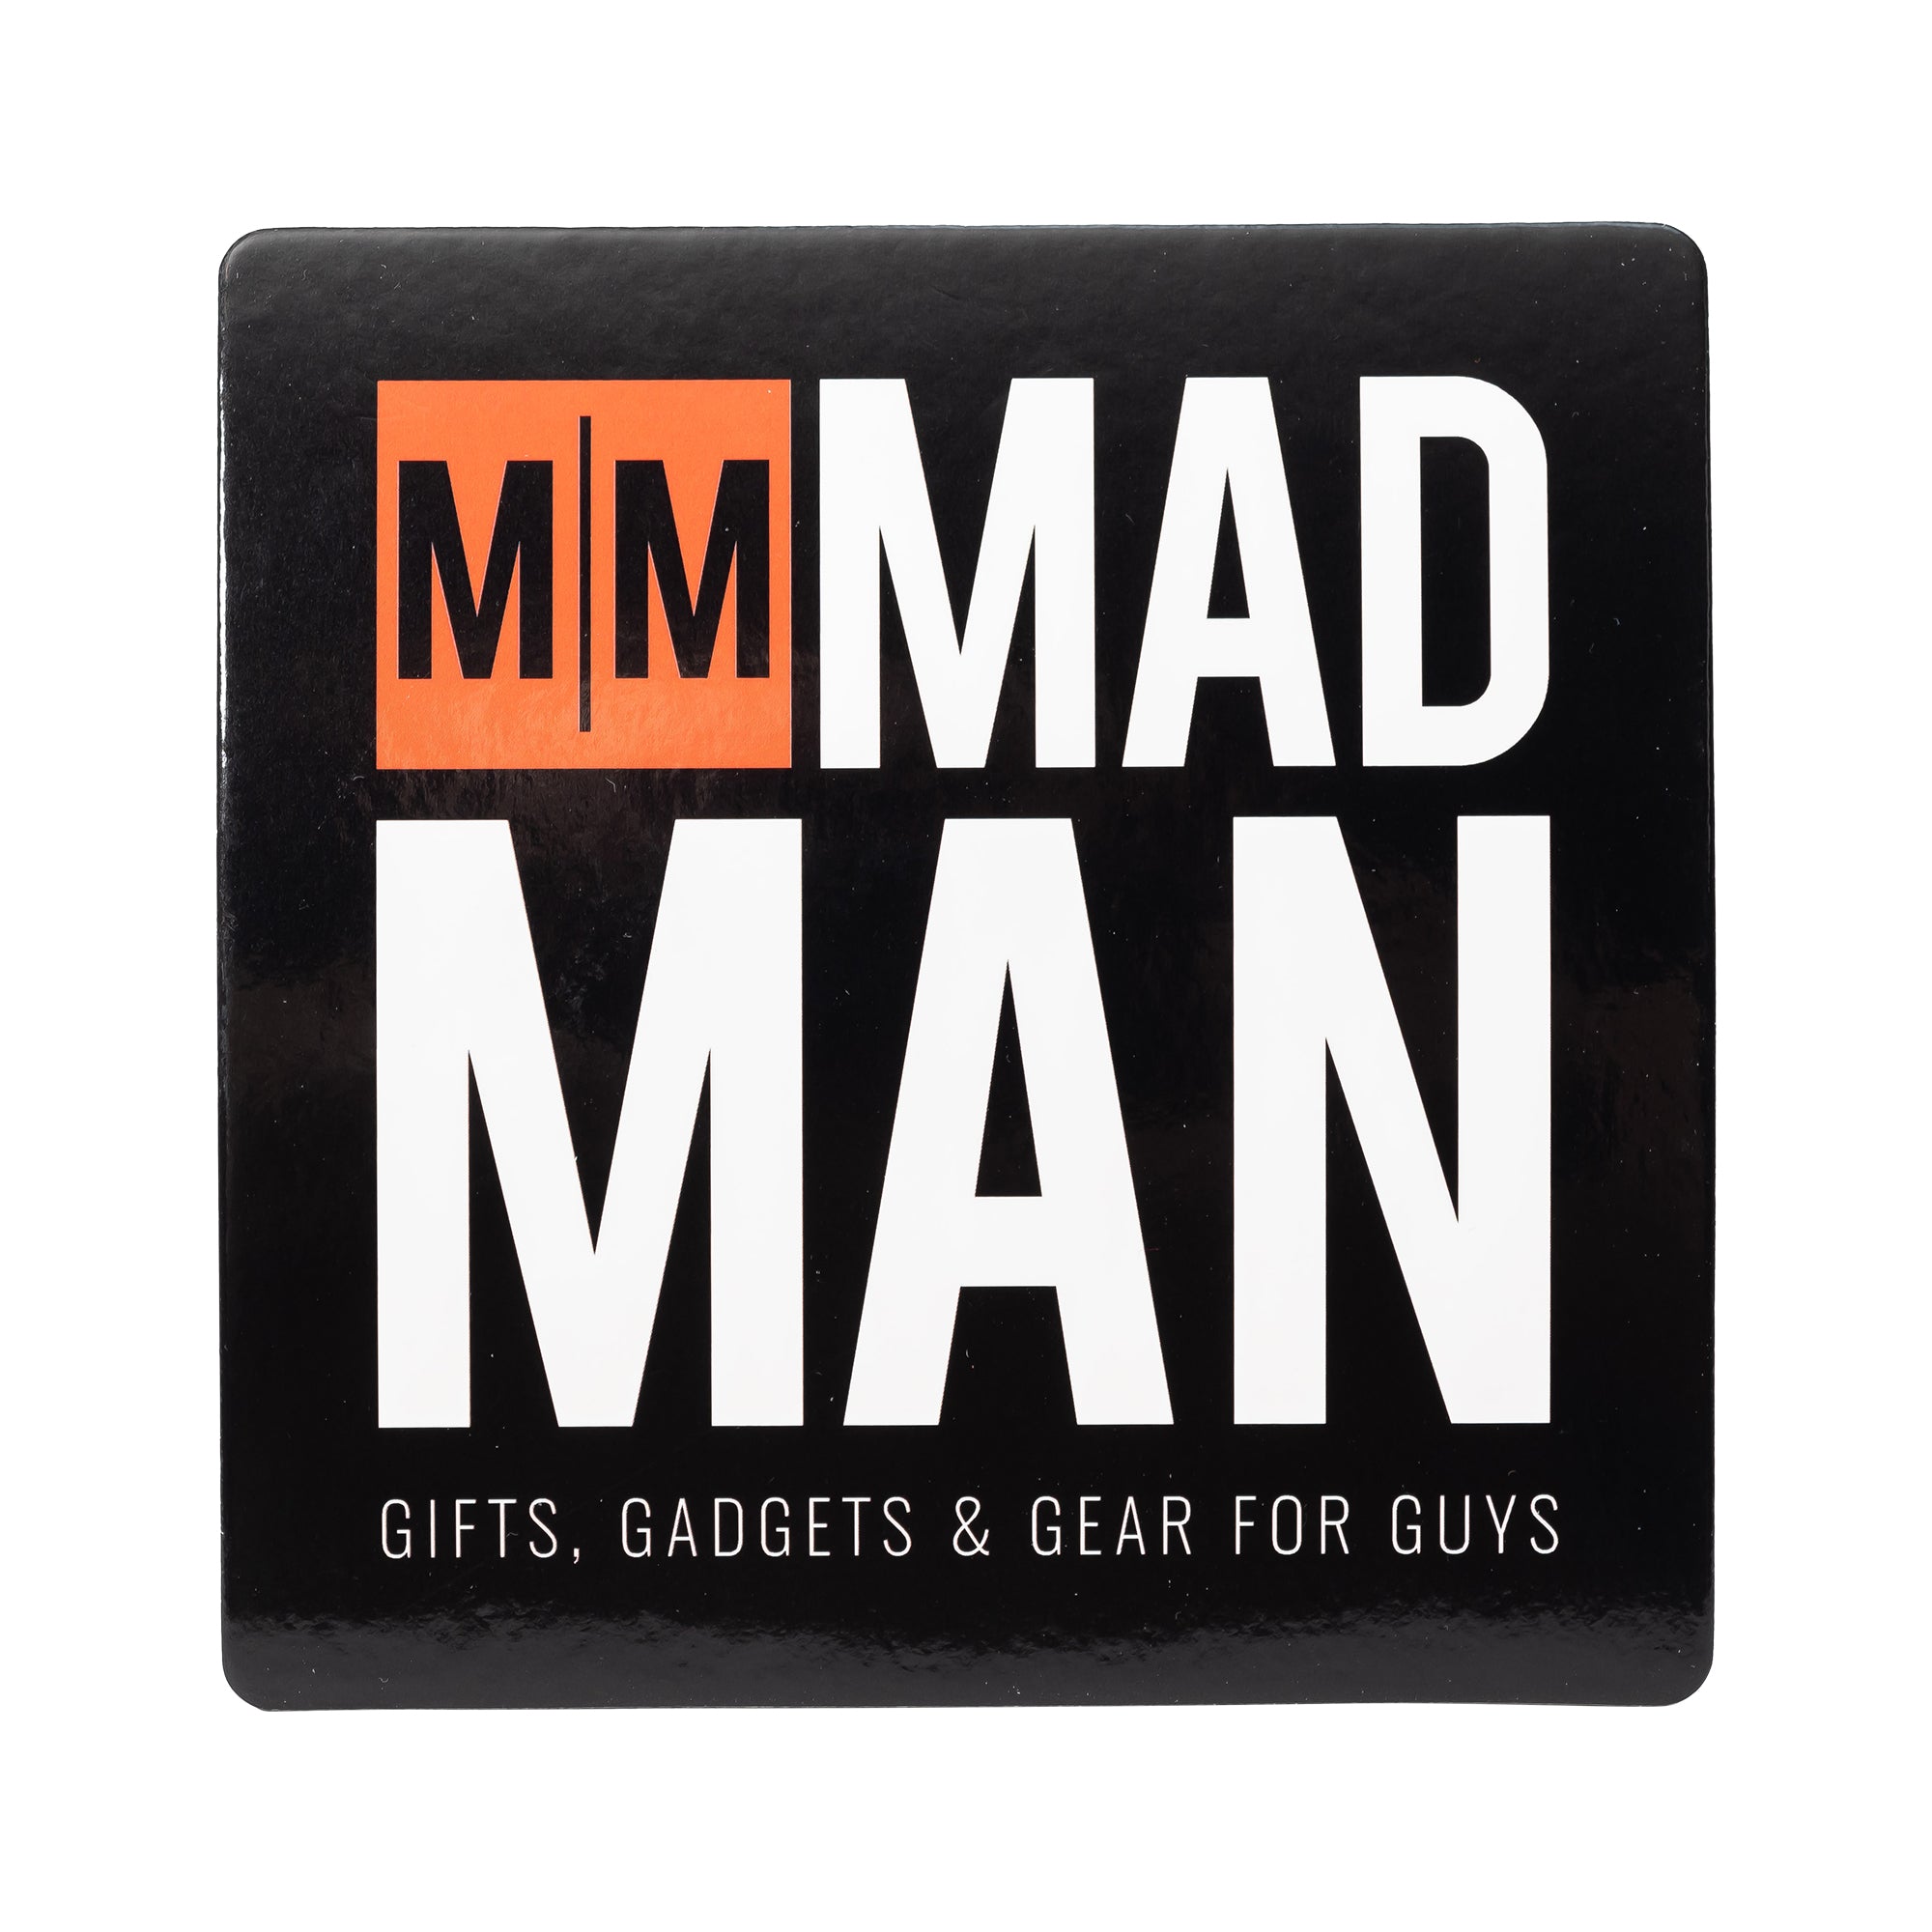 Mad Man Marketing Pack (4 pcs)